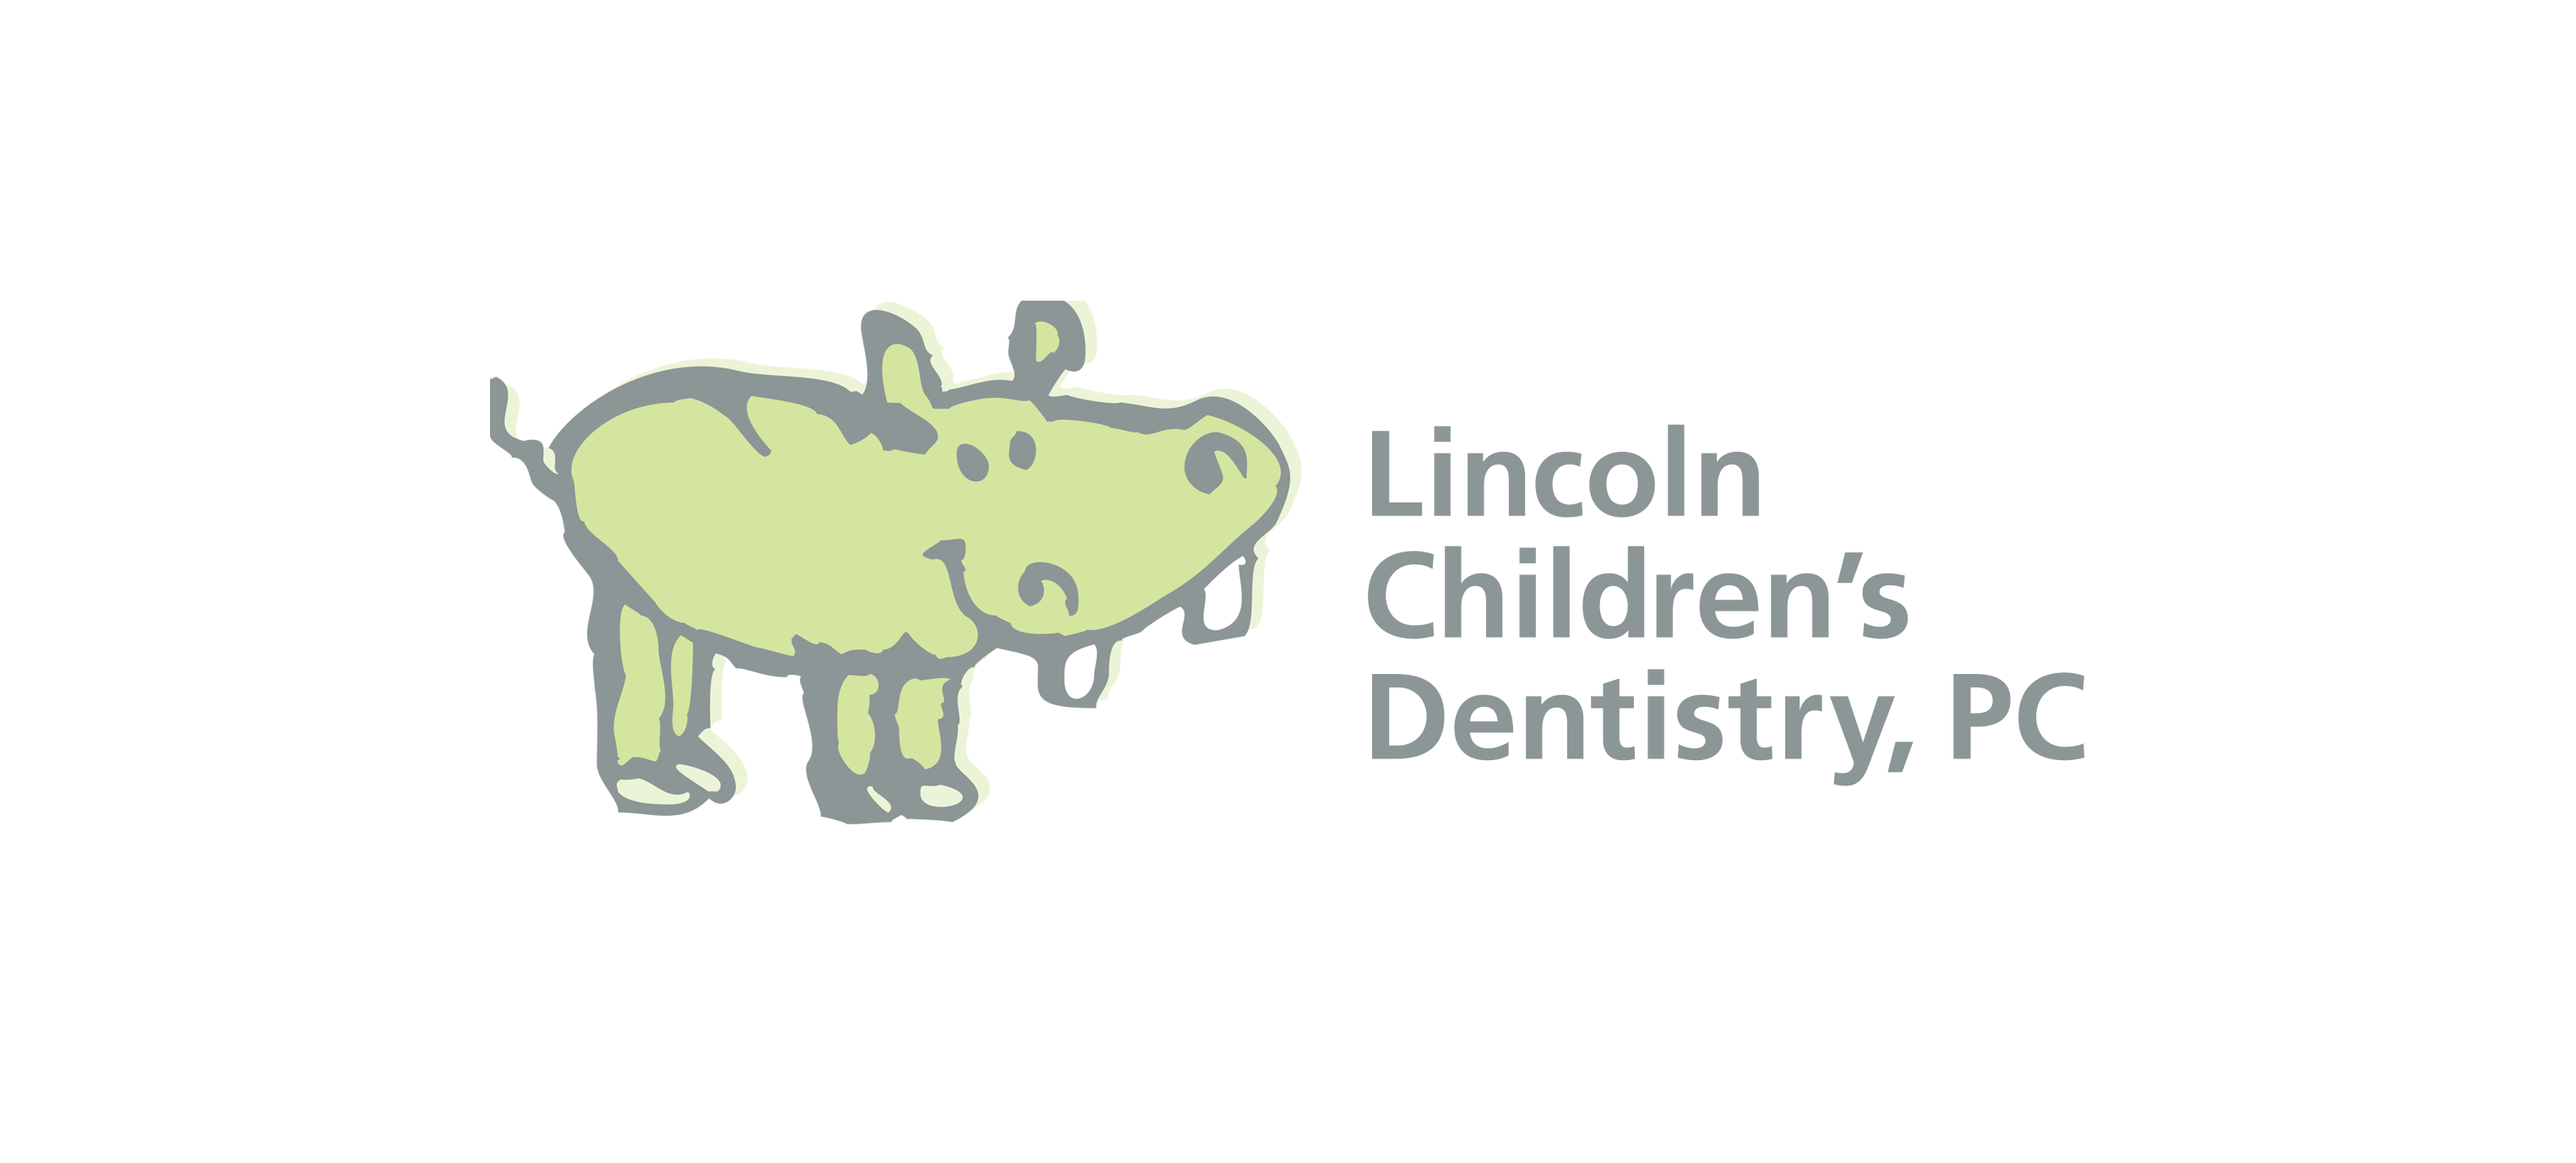 Lincoln Children’s Dentistry